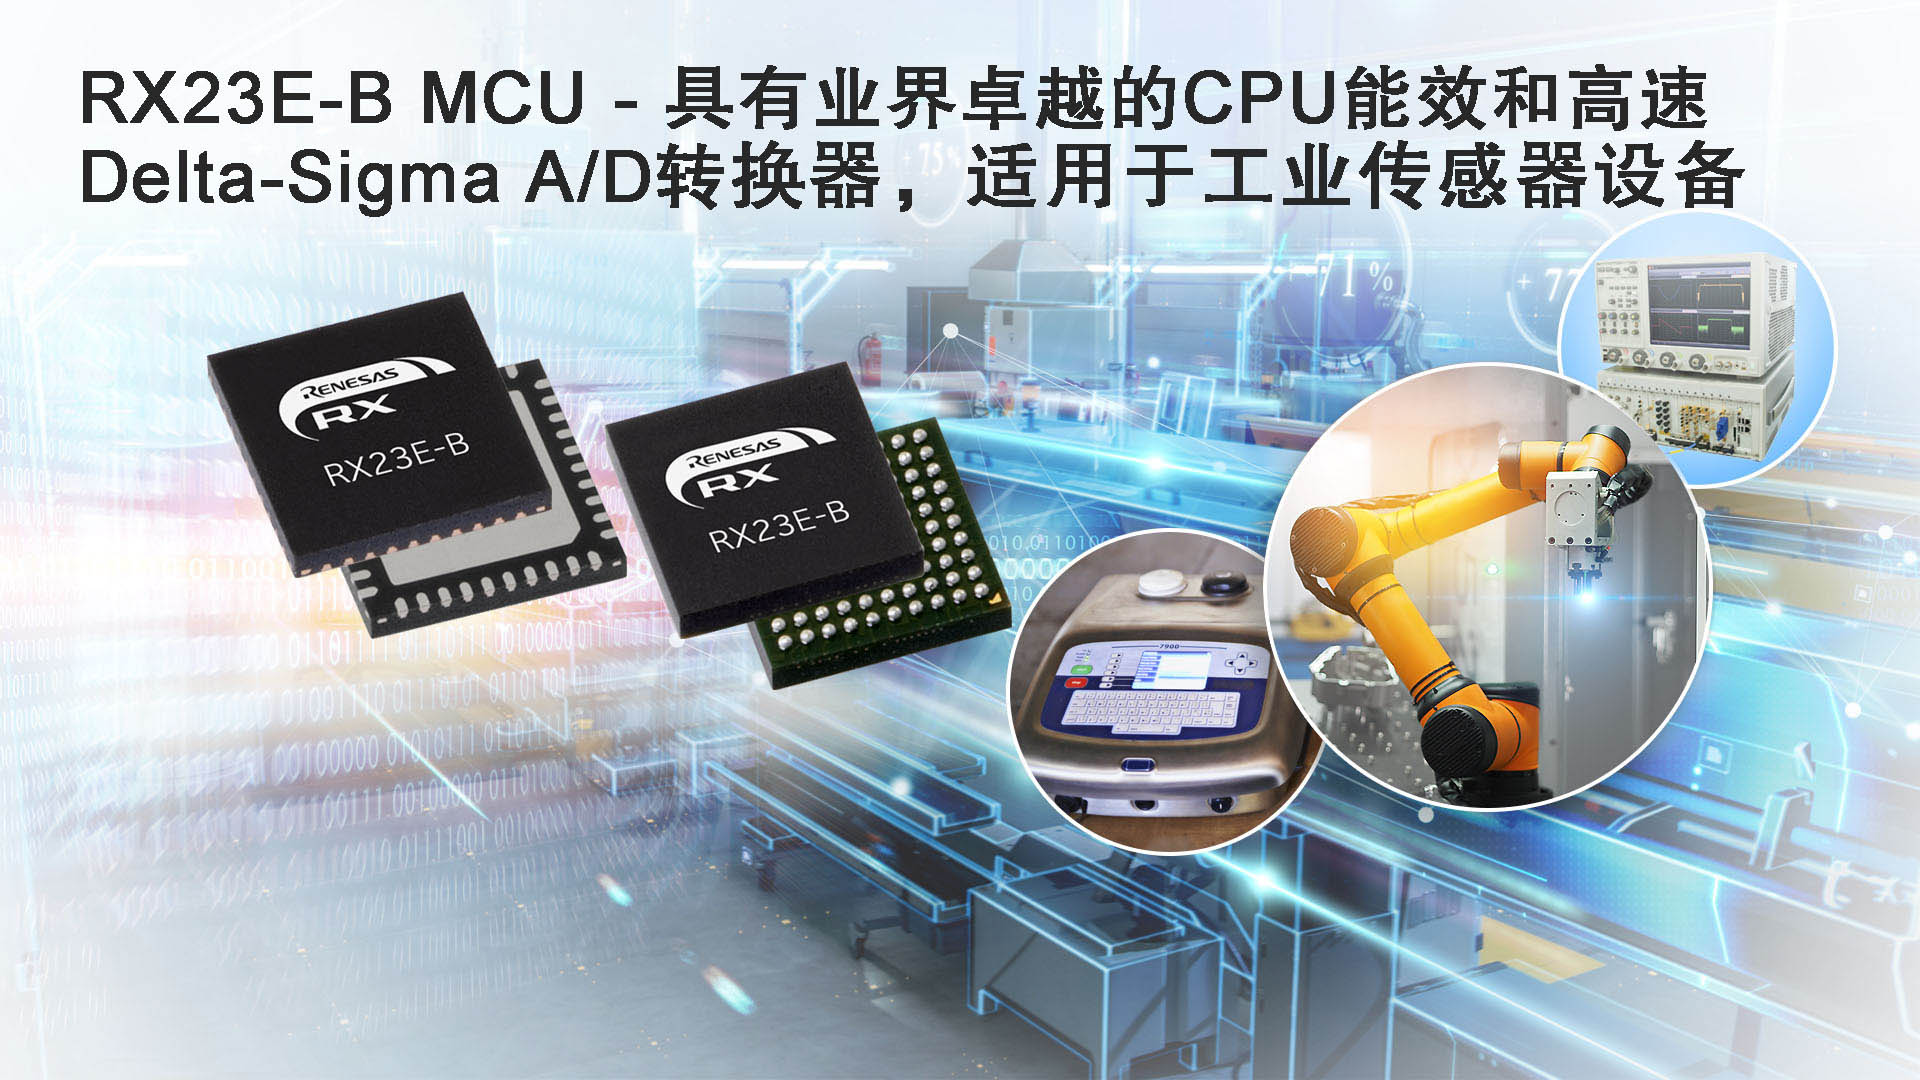 RX23E-B MCU - 具有业界卓越的CPU能效和高速Delta-Sigma A D转换器，适用于工业传感器设备.jpg